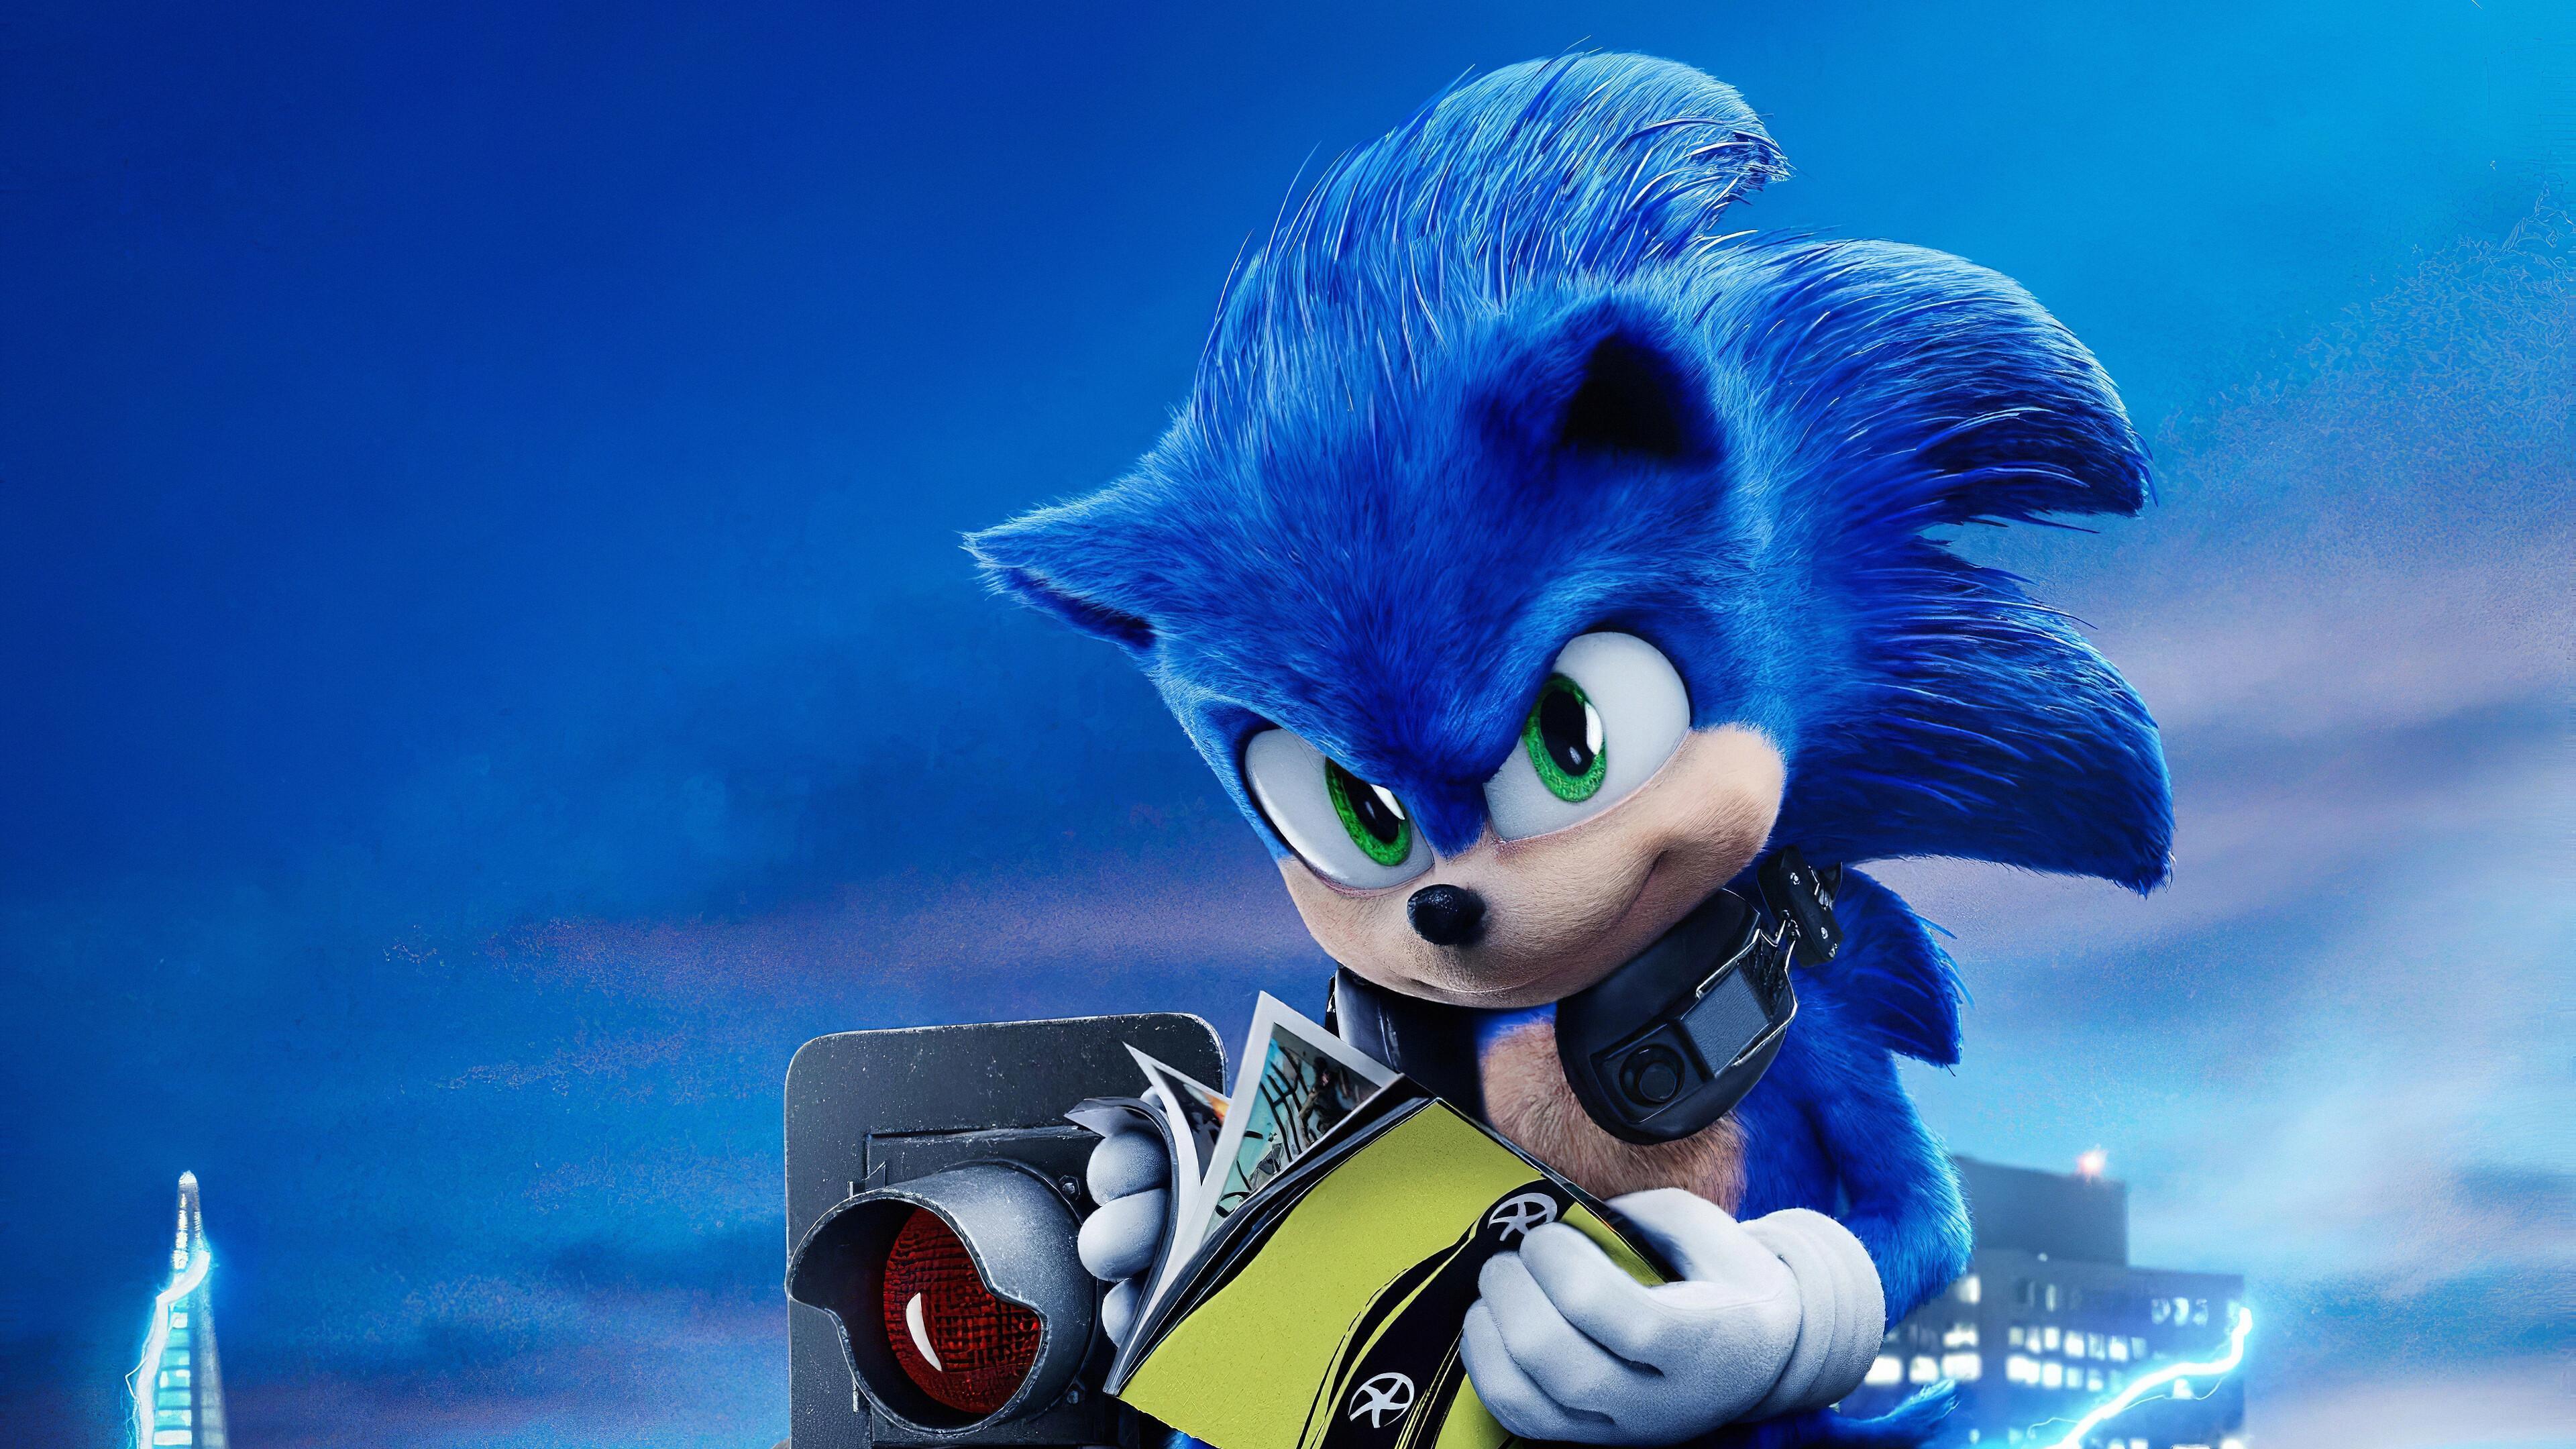 HD wallpaper, Poster, Sonic The Hedgehog, 4K, 2020, Movie